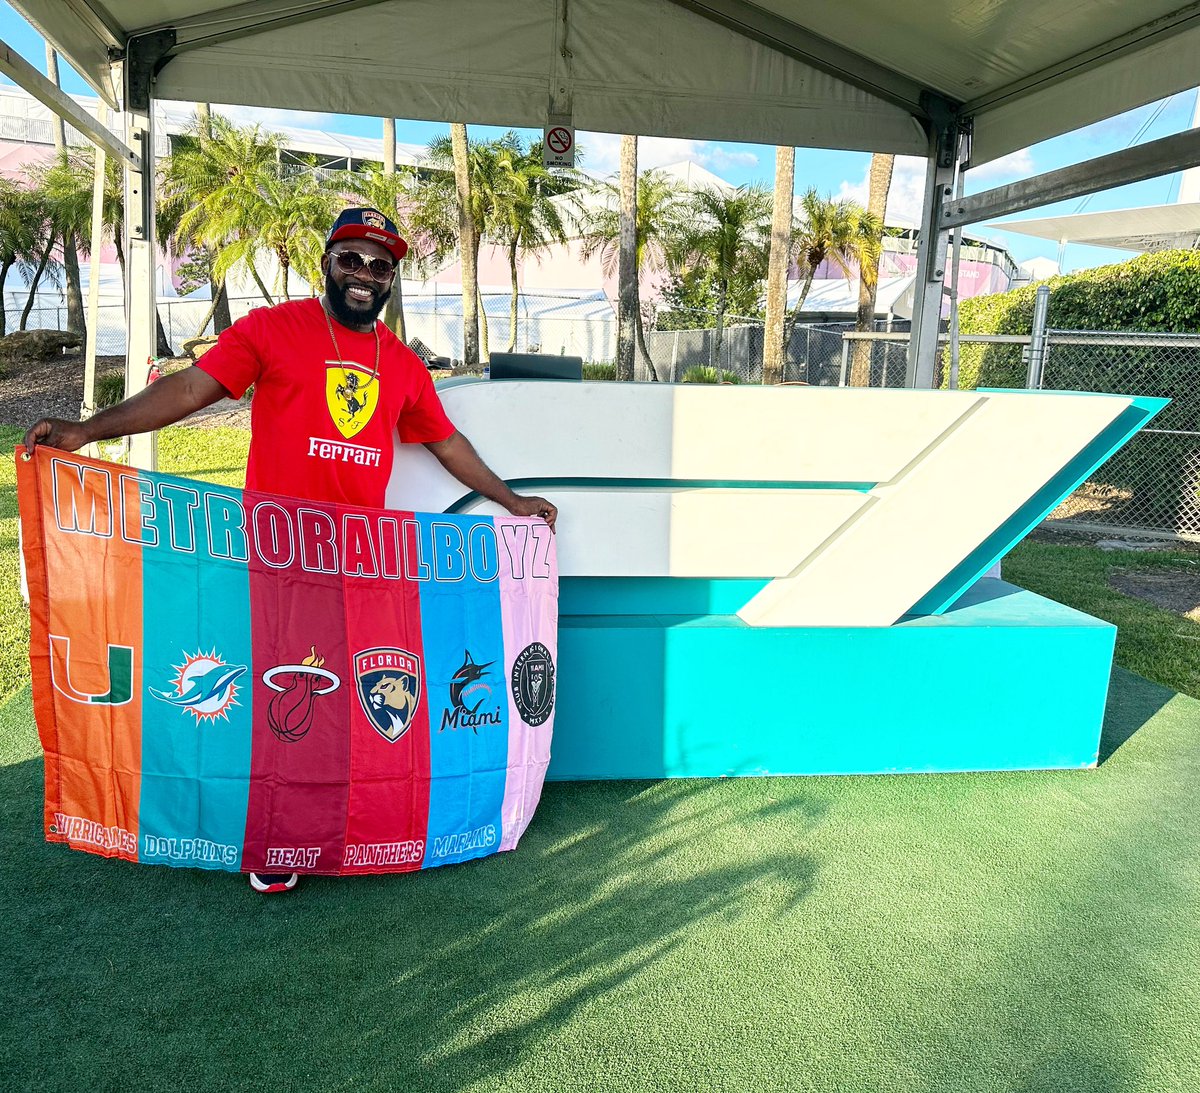 #MetroRailBoyz™️ 🏎️ We Represent for Da Home Teams #MiamiF1 Race at @HardRockStadium with Dem Boyz @MetroRailBoyz! We're Team Ferrari this Year 🏎️ #MommaWeMadeIt #NoPicturesPlease 🏁 Yo! Let's Go! #MetroRailBoyz 🏁 #F1 #GrandPrix #F1GrandPrix #FormulaOne #Ferrari